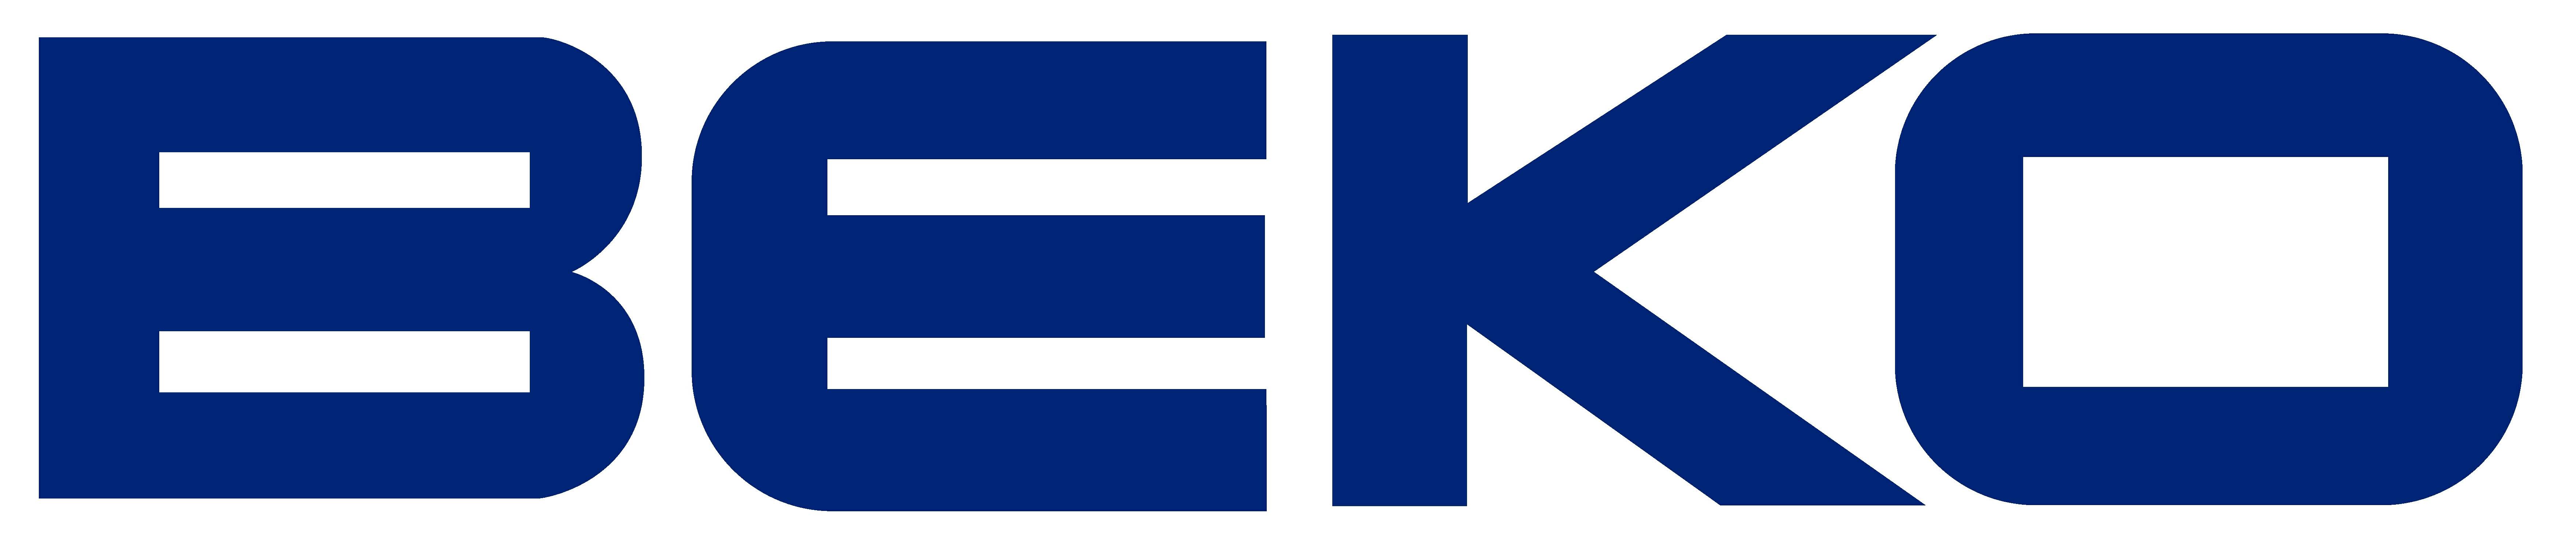 Benkom Logo photo - 1